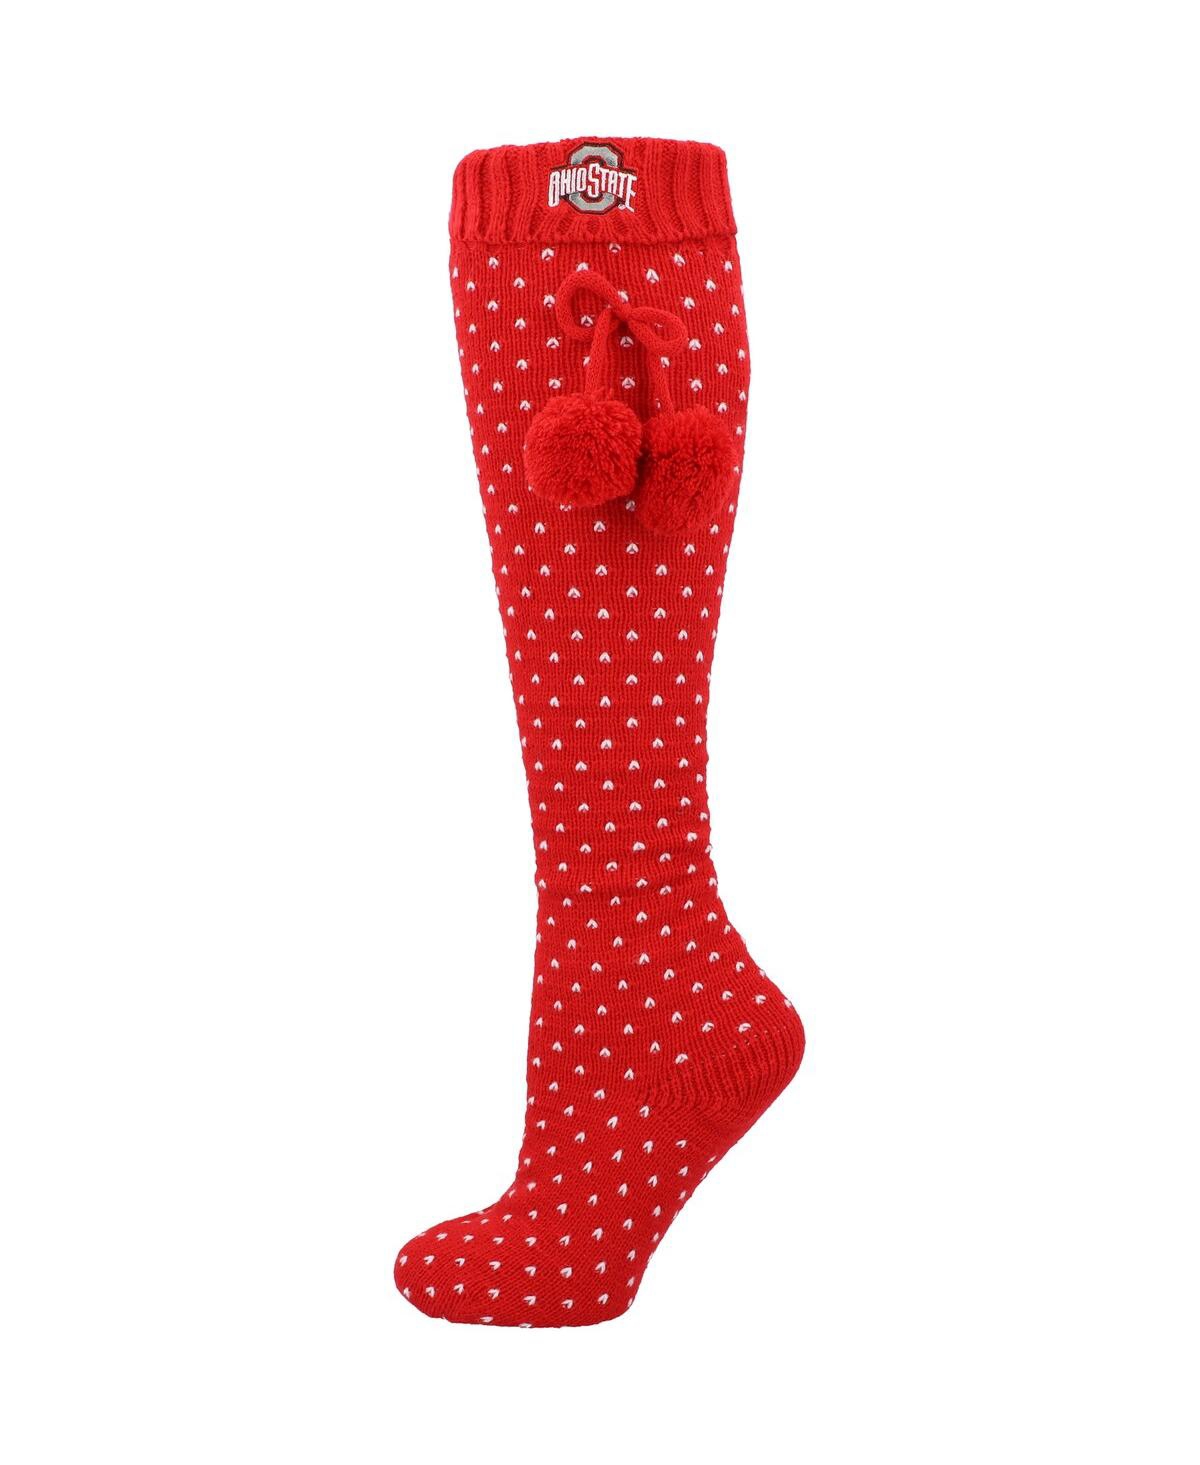 Zoozatz Women's  Scarlet Ohio State Buckeyes Knee High Socks